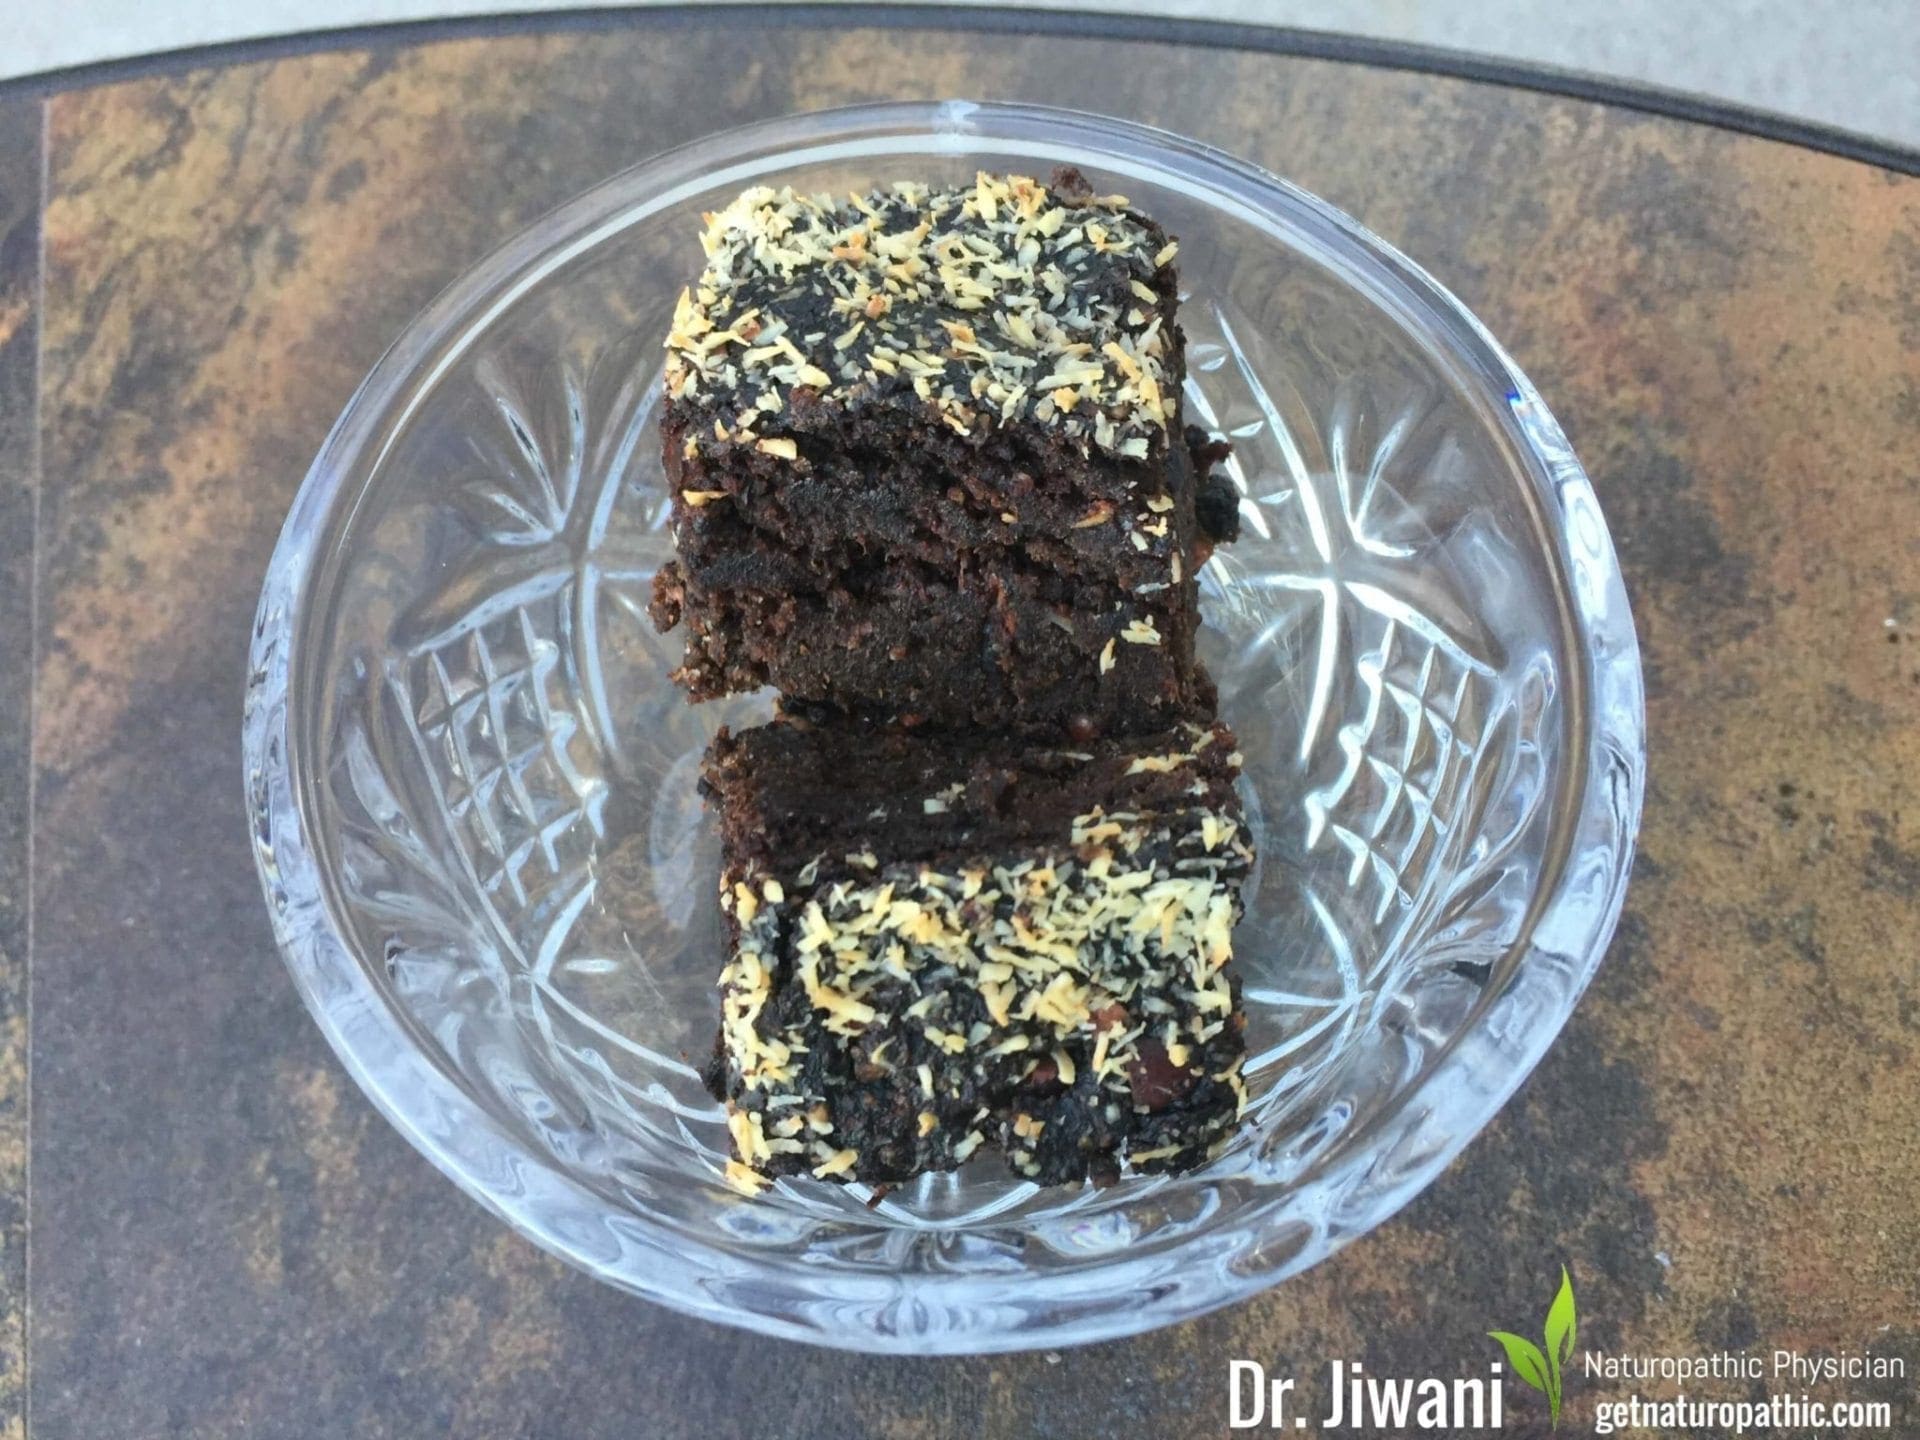 Dr. Jiwani’s Fudge Brownies are Decadent yet Low Carb, Gluten-Free, Egg-Free, Dairy-Free, Soy-Free, Corn-Free & for Paleo, Keto, Vegan & Grain-Free Diets | Dr. Jiwani's Naturopathic Nuggets Blog